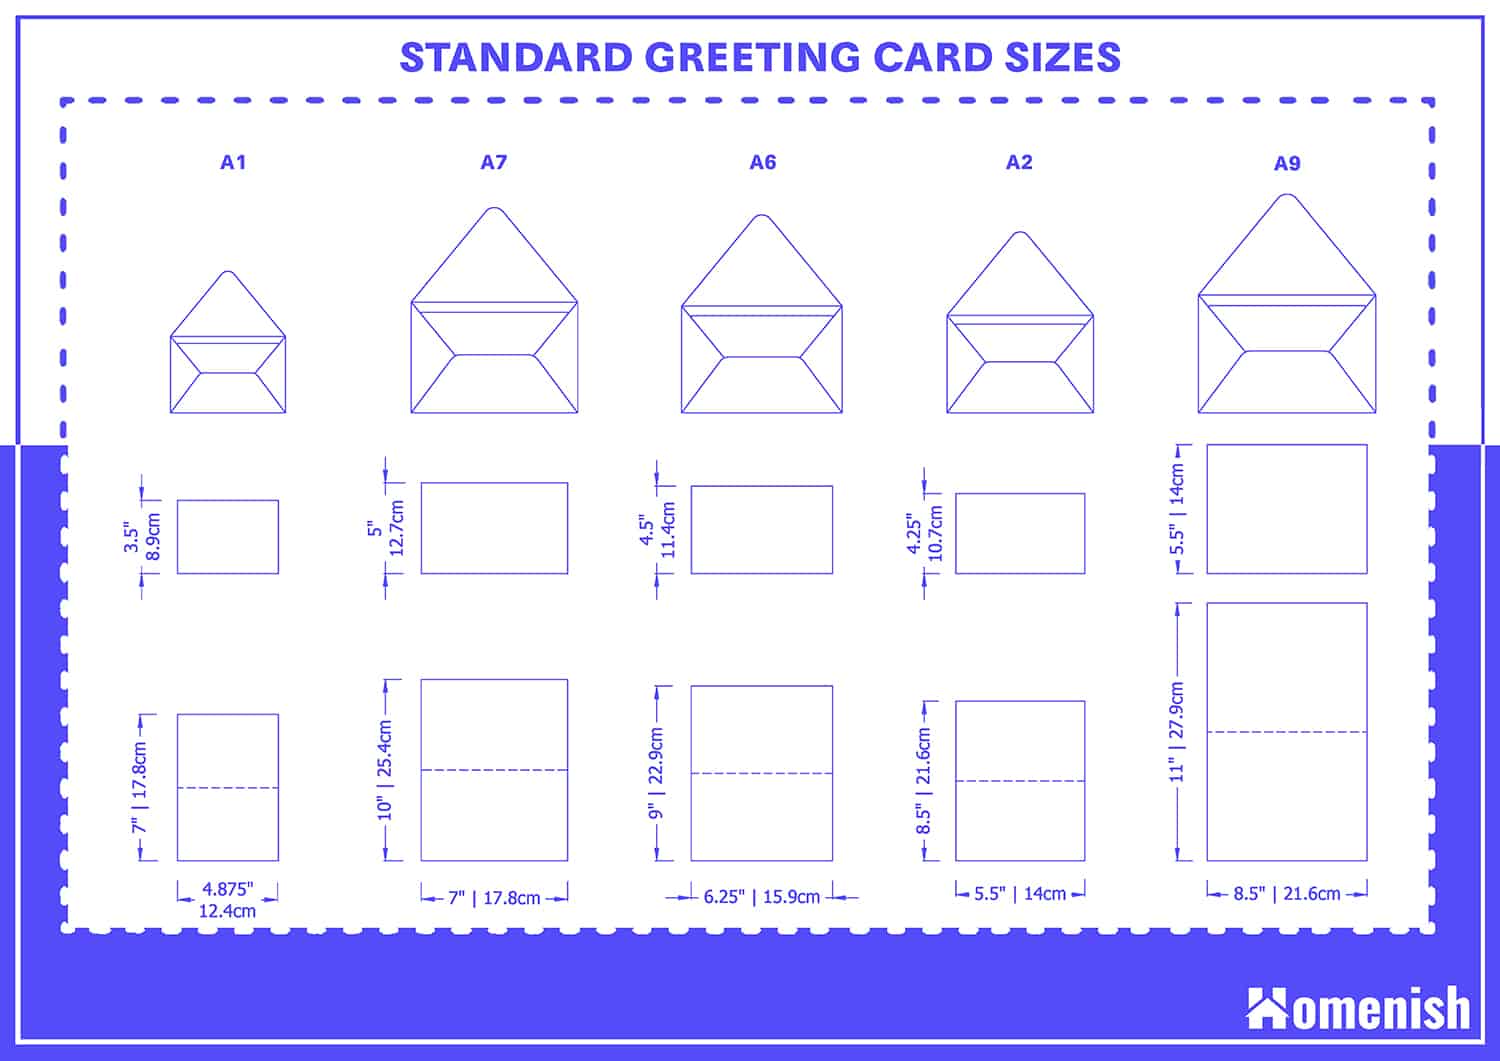 Standard Greeting Card Sizes